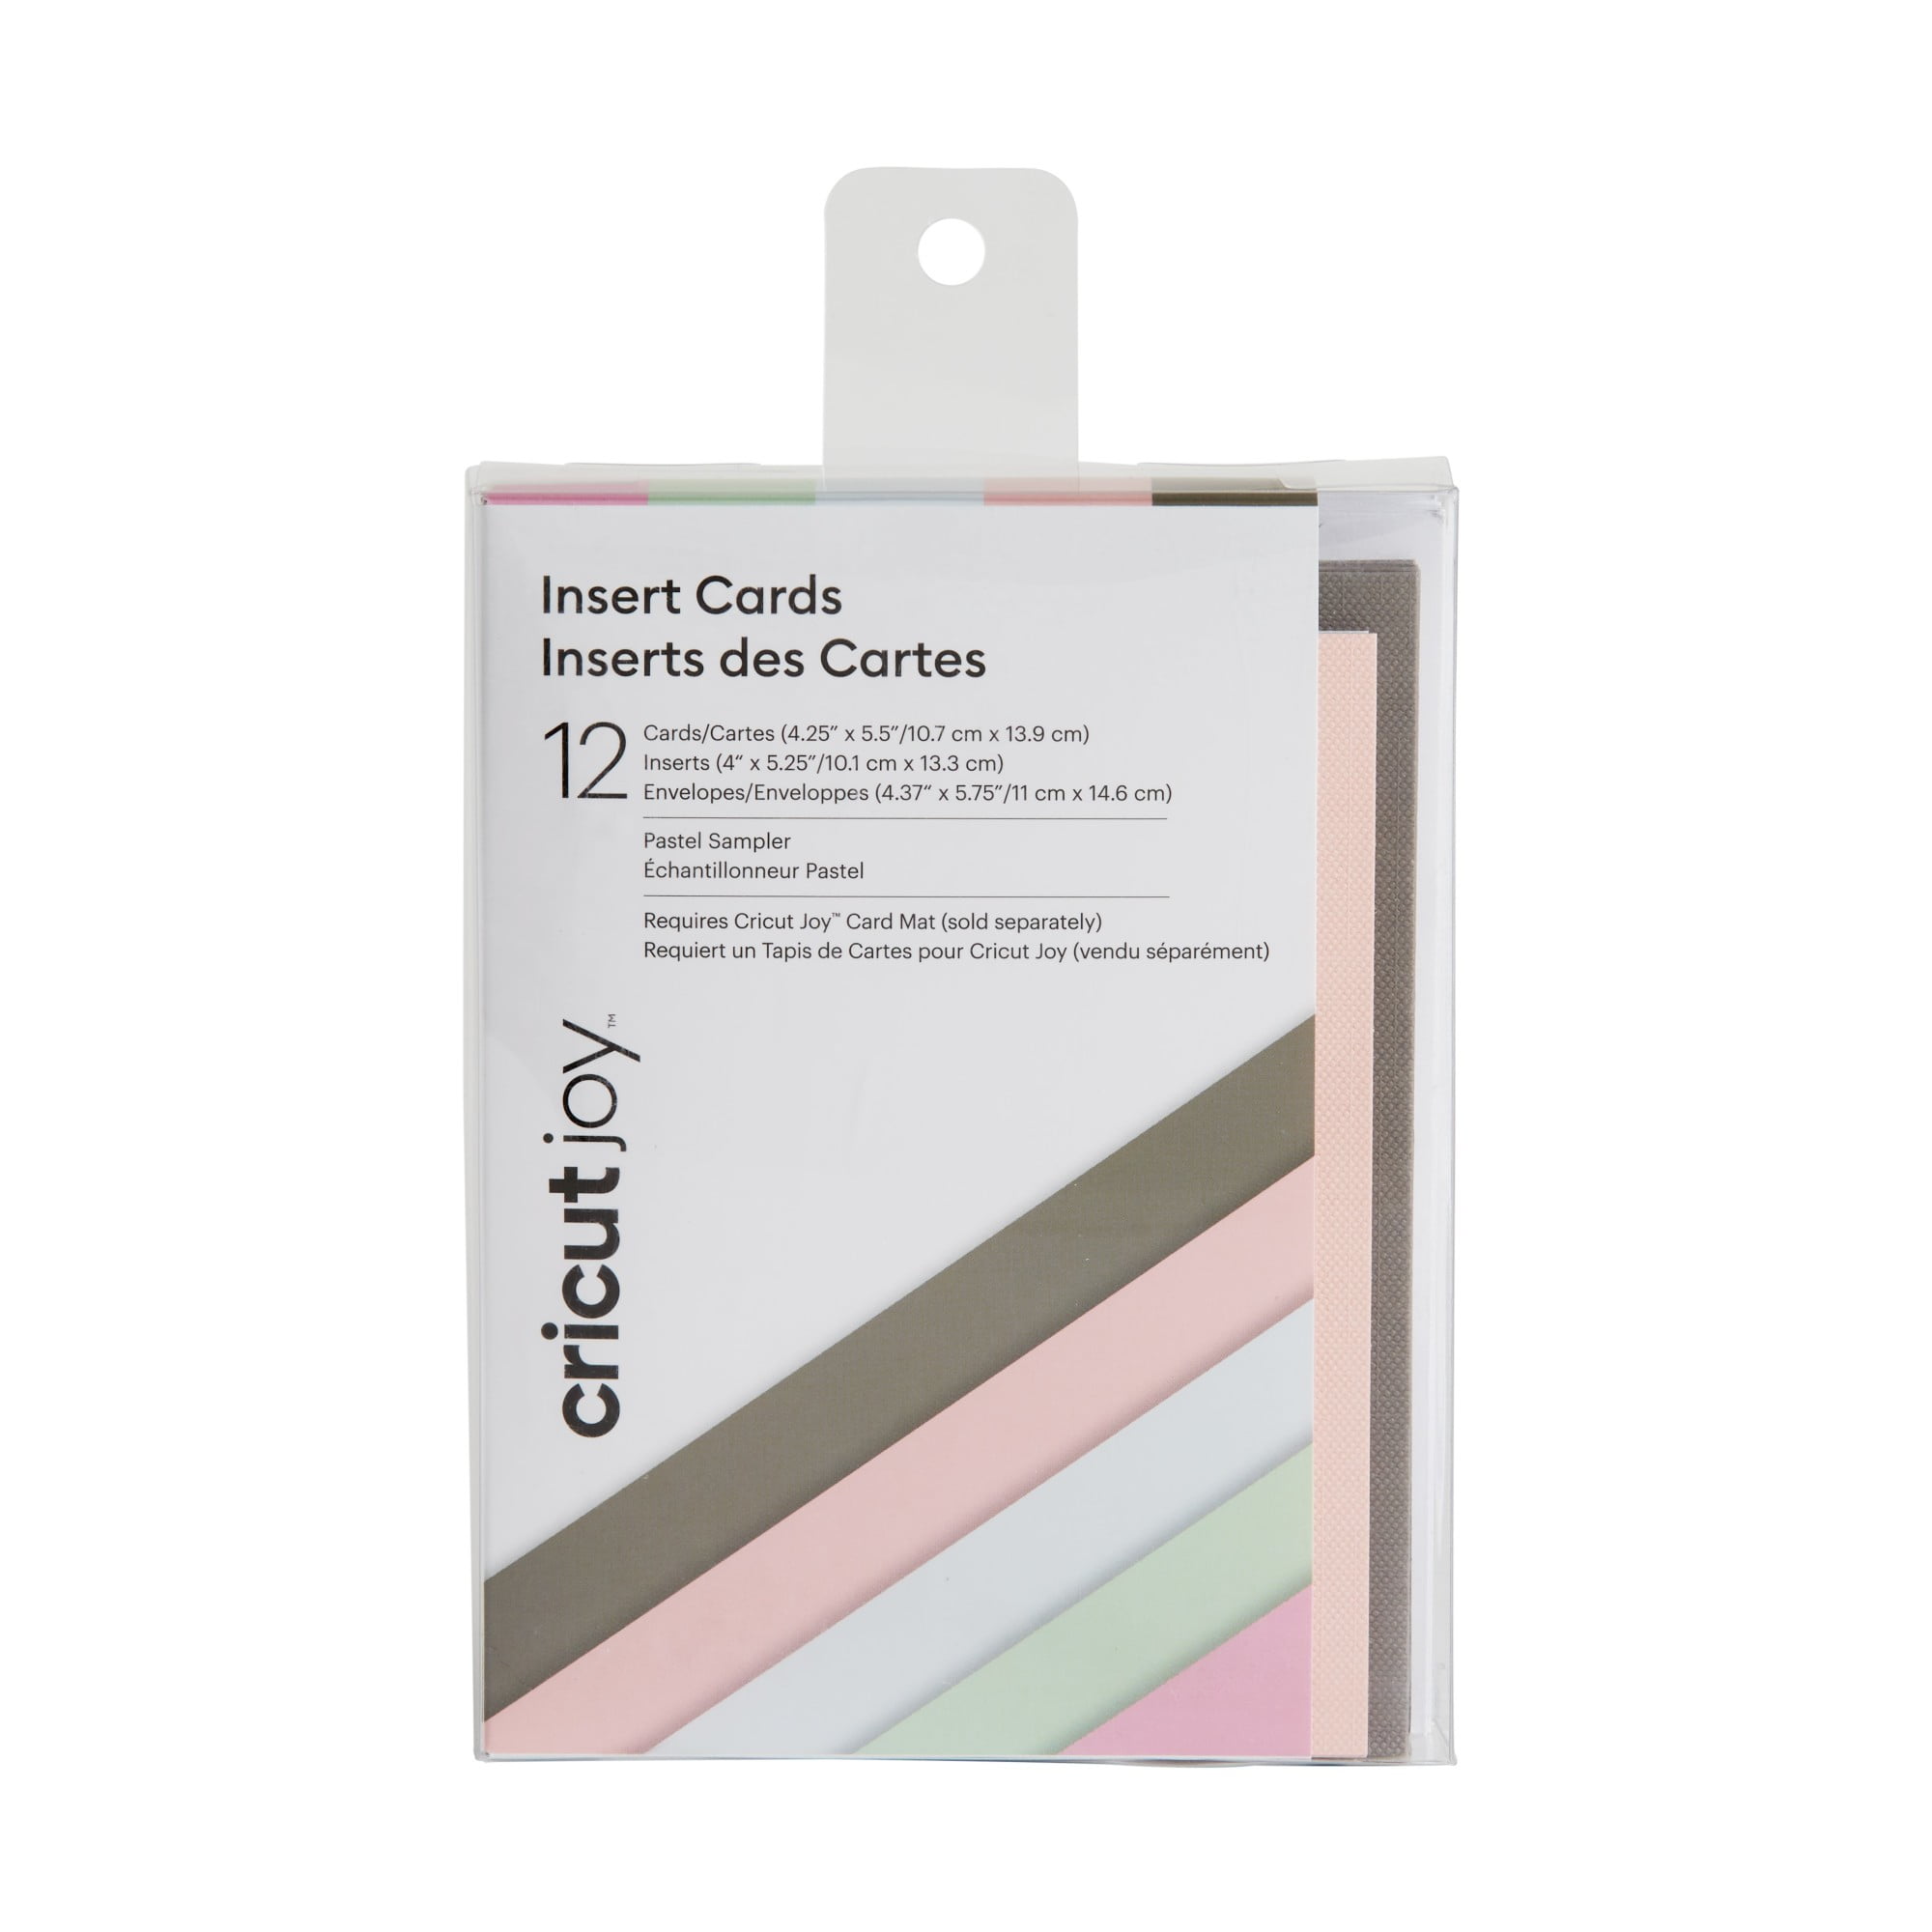 Cricut Joy Insert Cards - Pastel Sampler